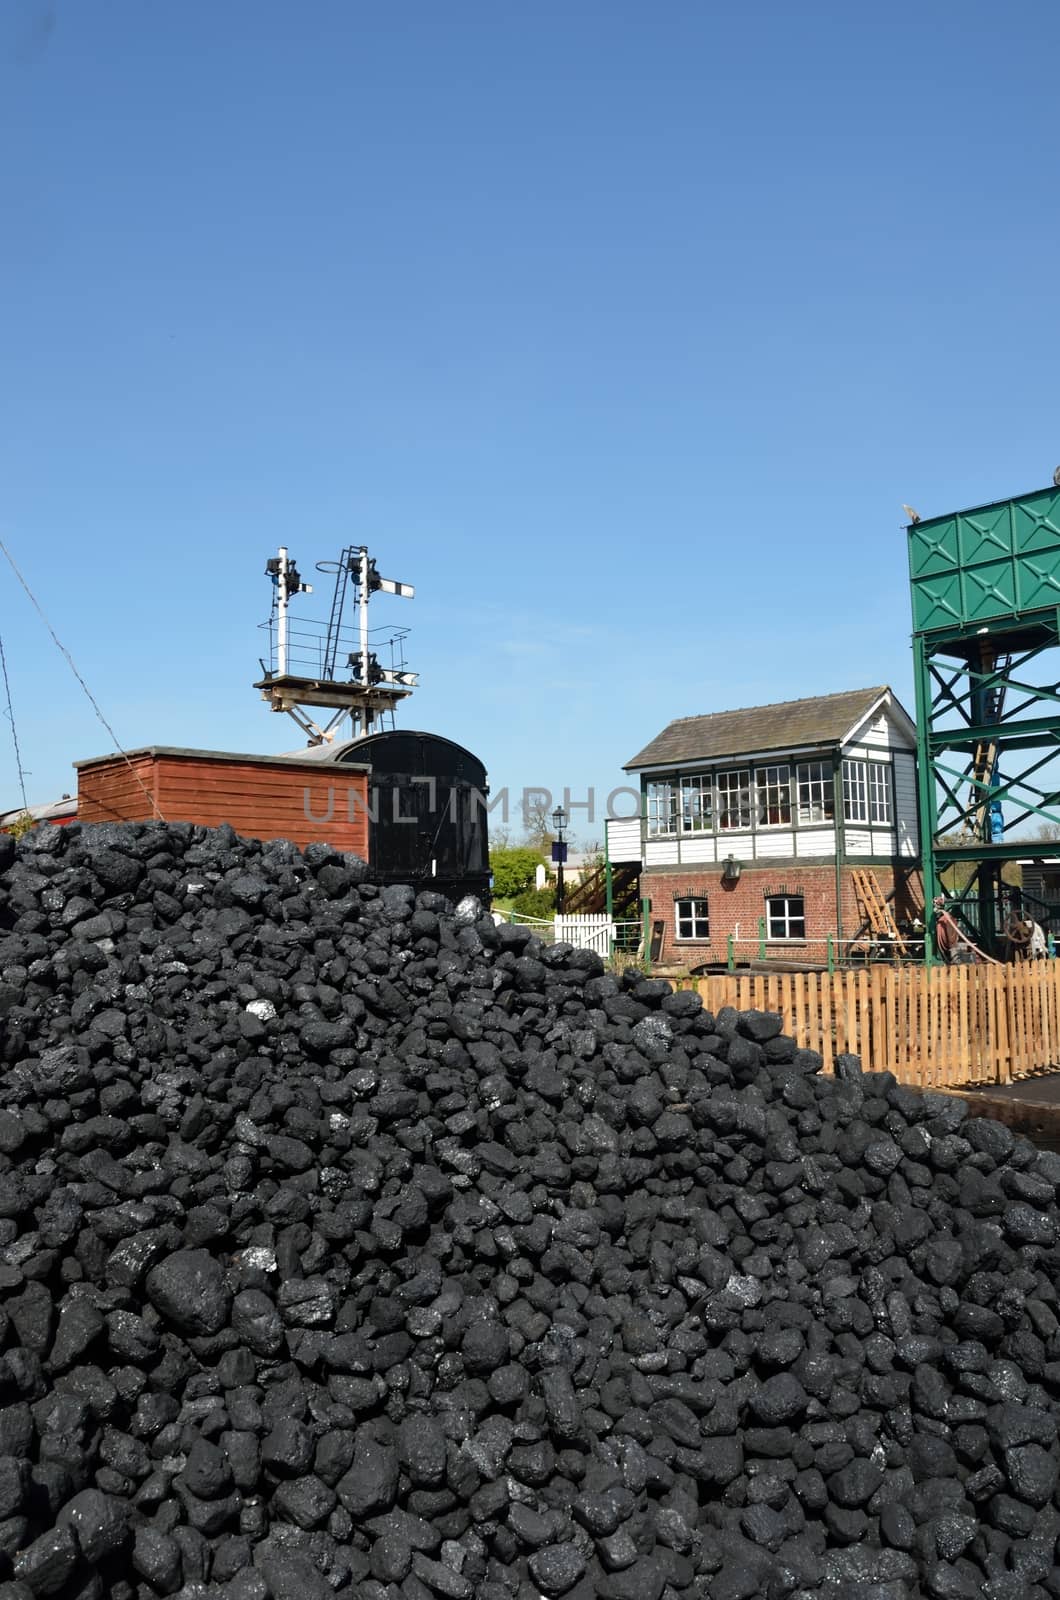 Steam railway scene and  coal by pauws99